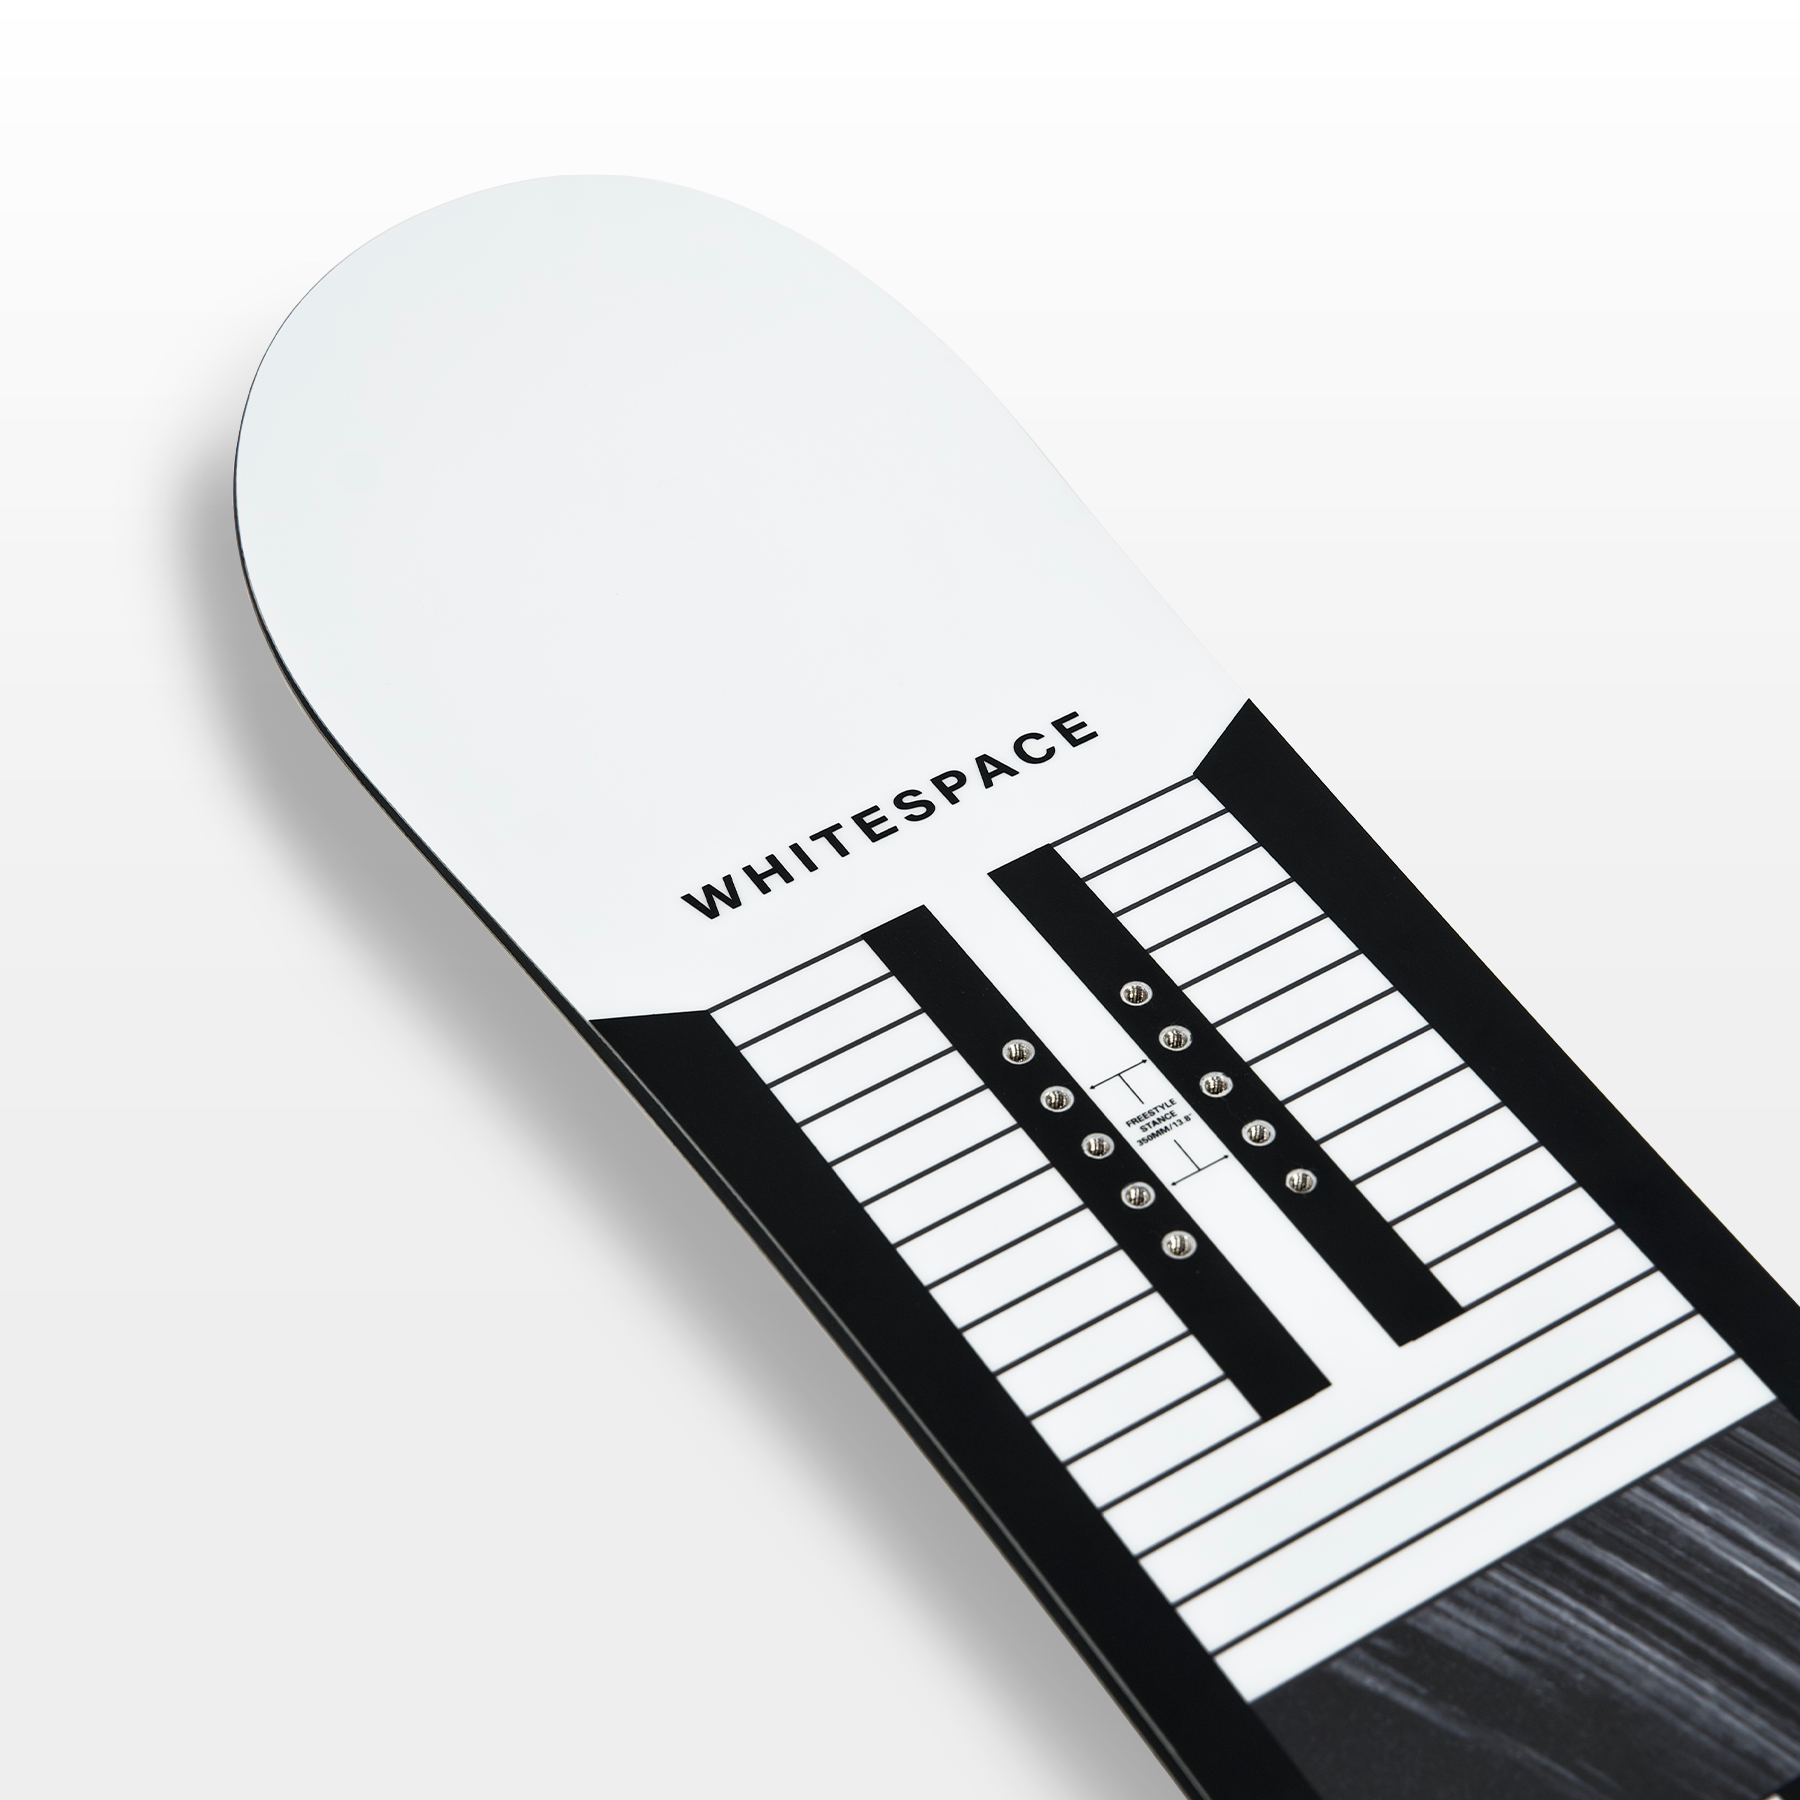 Shaun White Launches Active Lifestyle Brand 'Whitespace